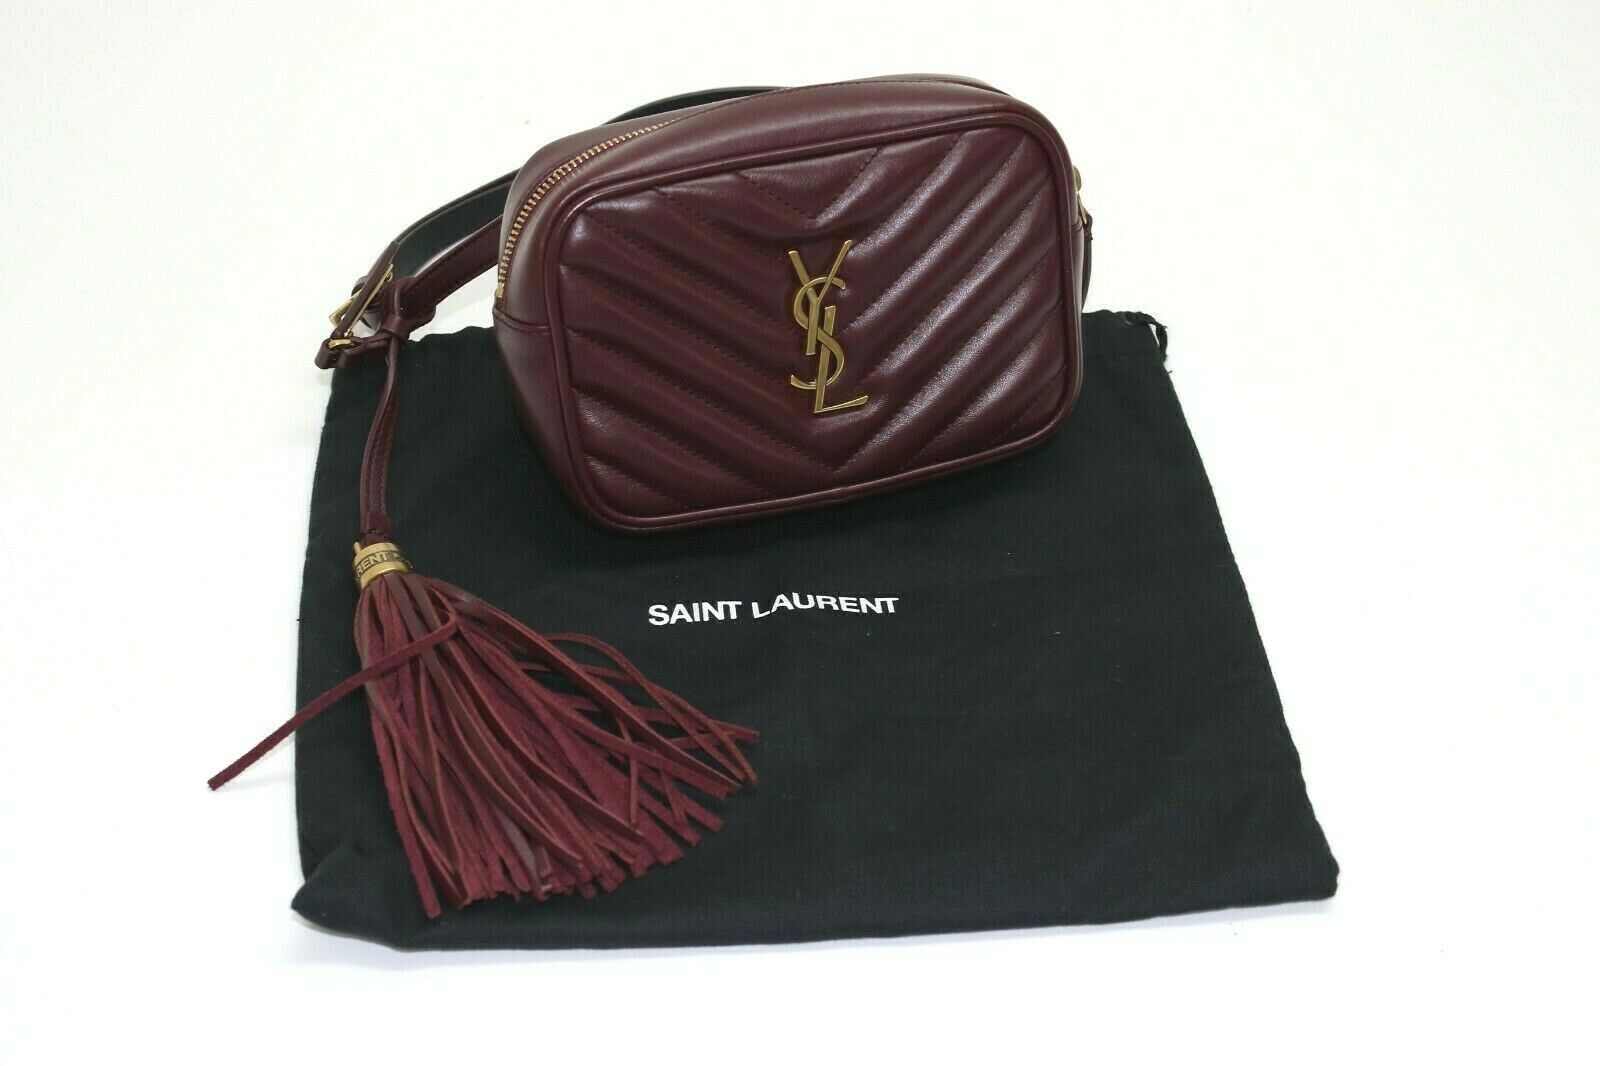 Saint Laurent Lou Belt Bag in Quilted Leather - Black